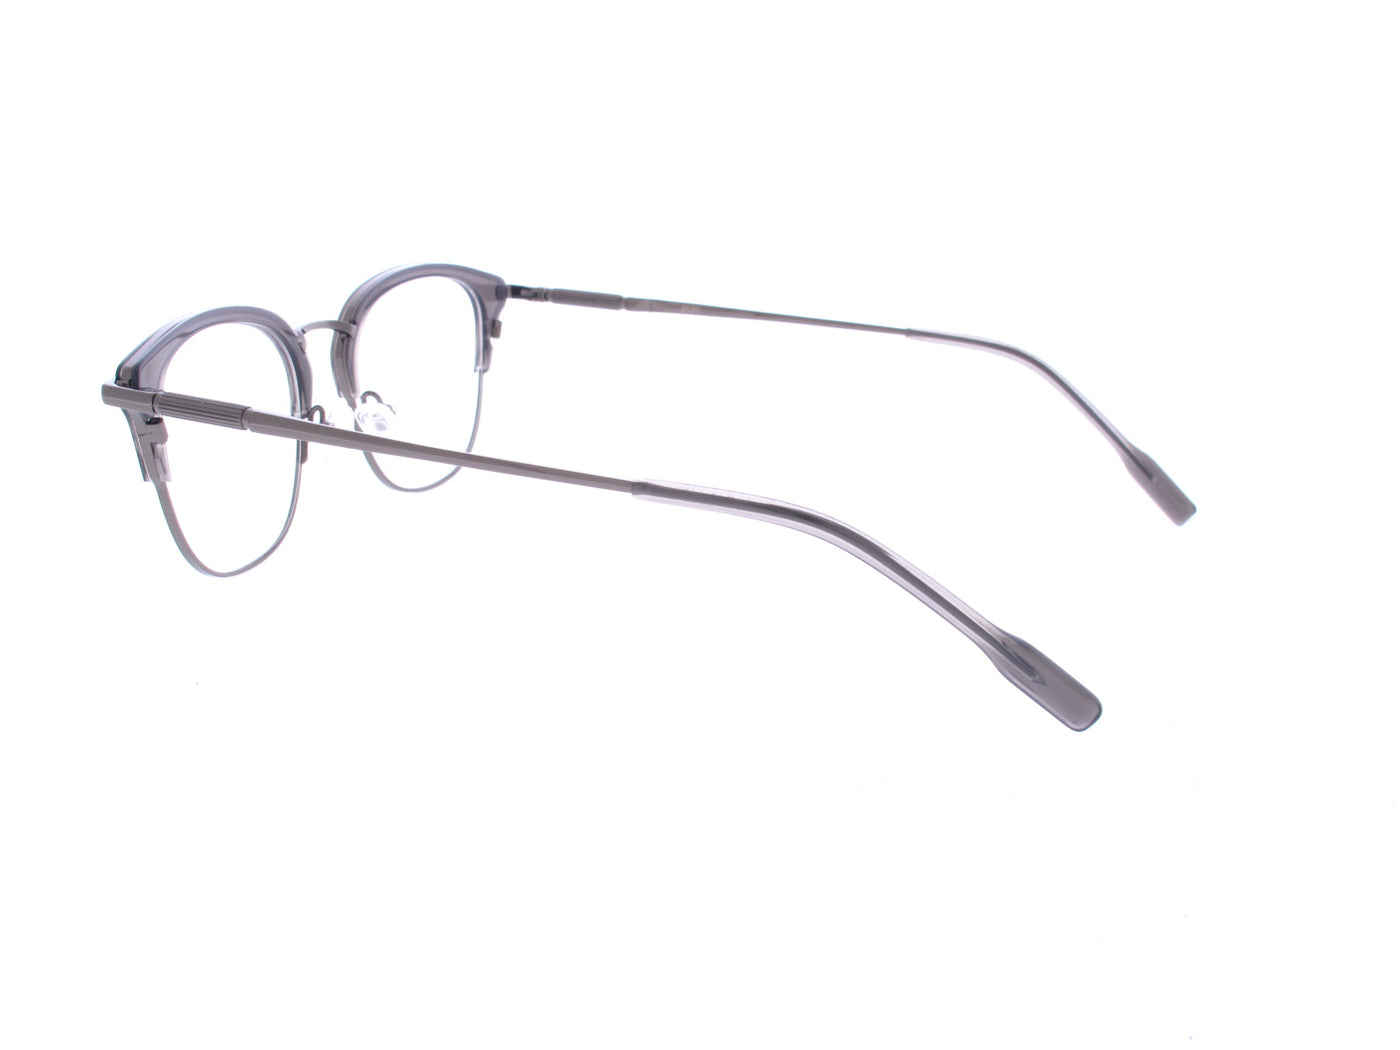 Cateye Glasses 740845